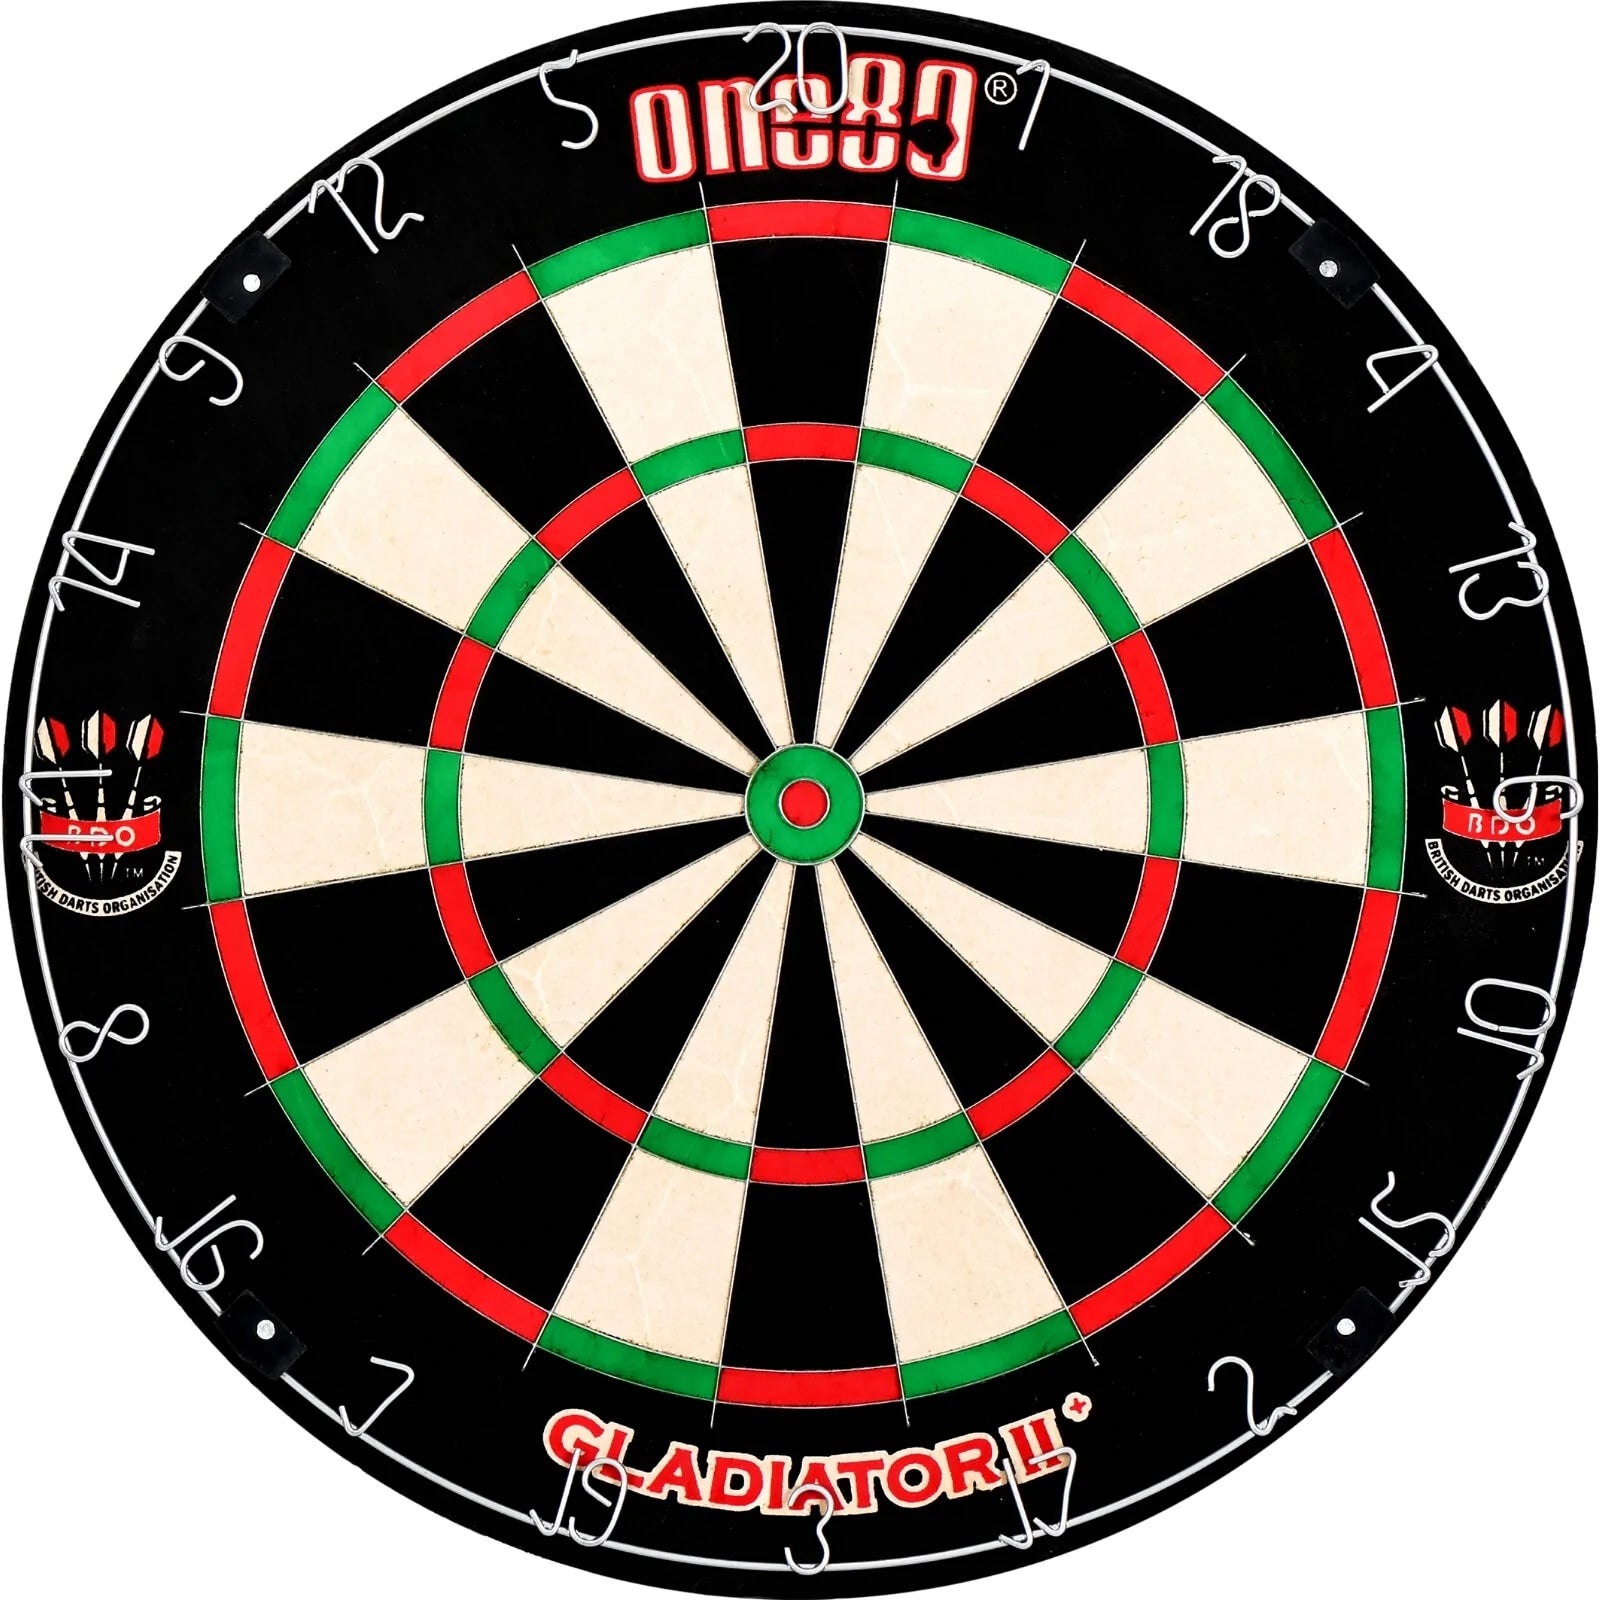 ONE80 Gladiator 2+ High Quality Bristle Dartboard - Darts Direct 